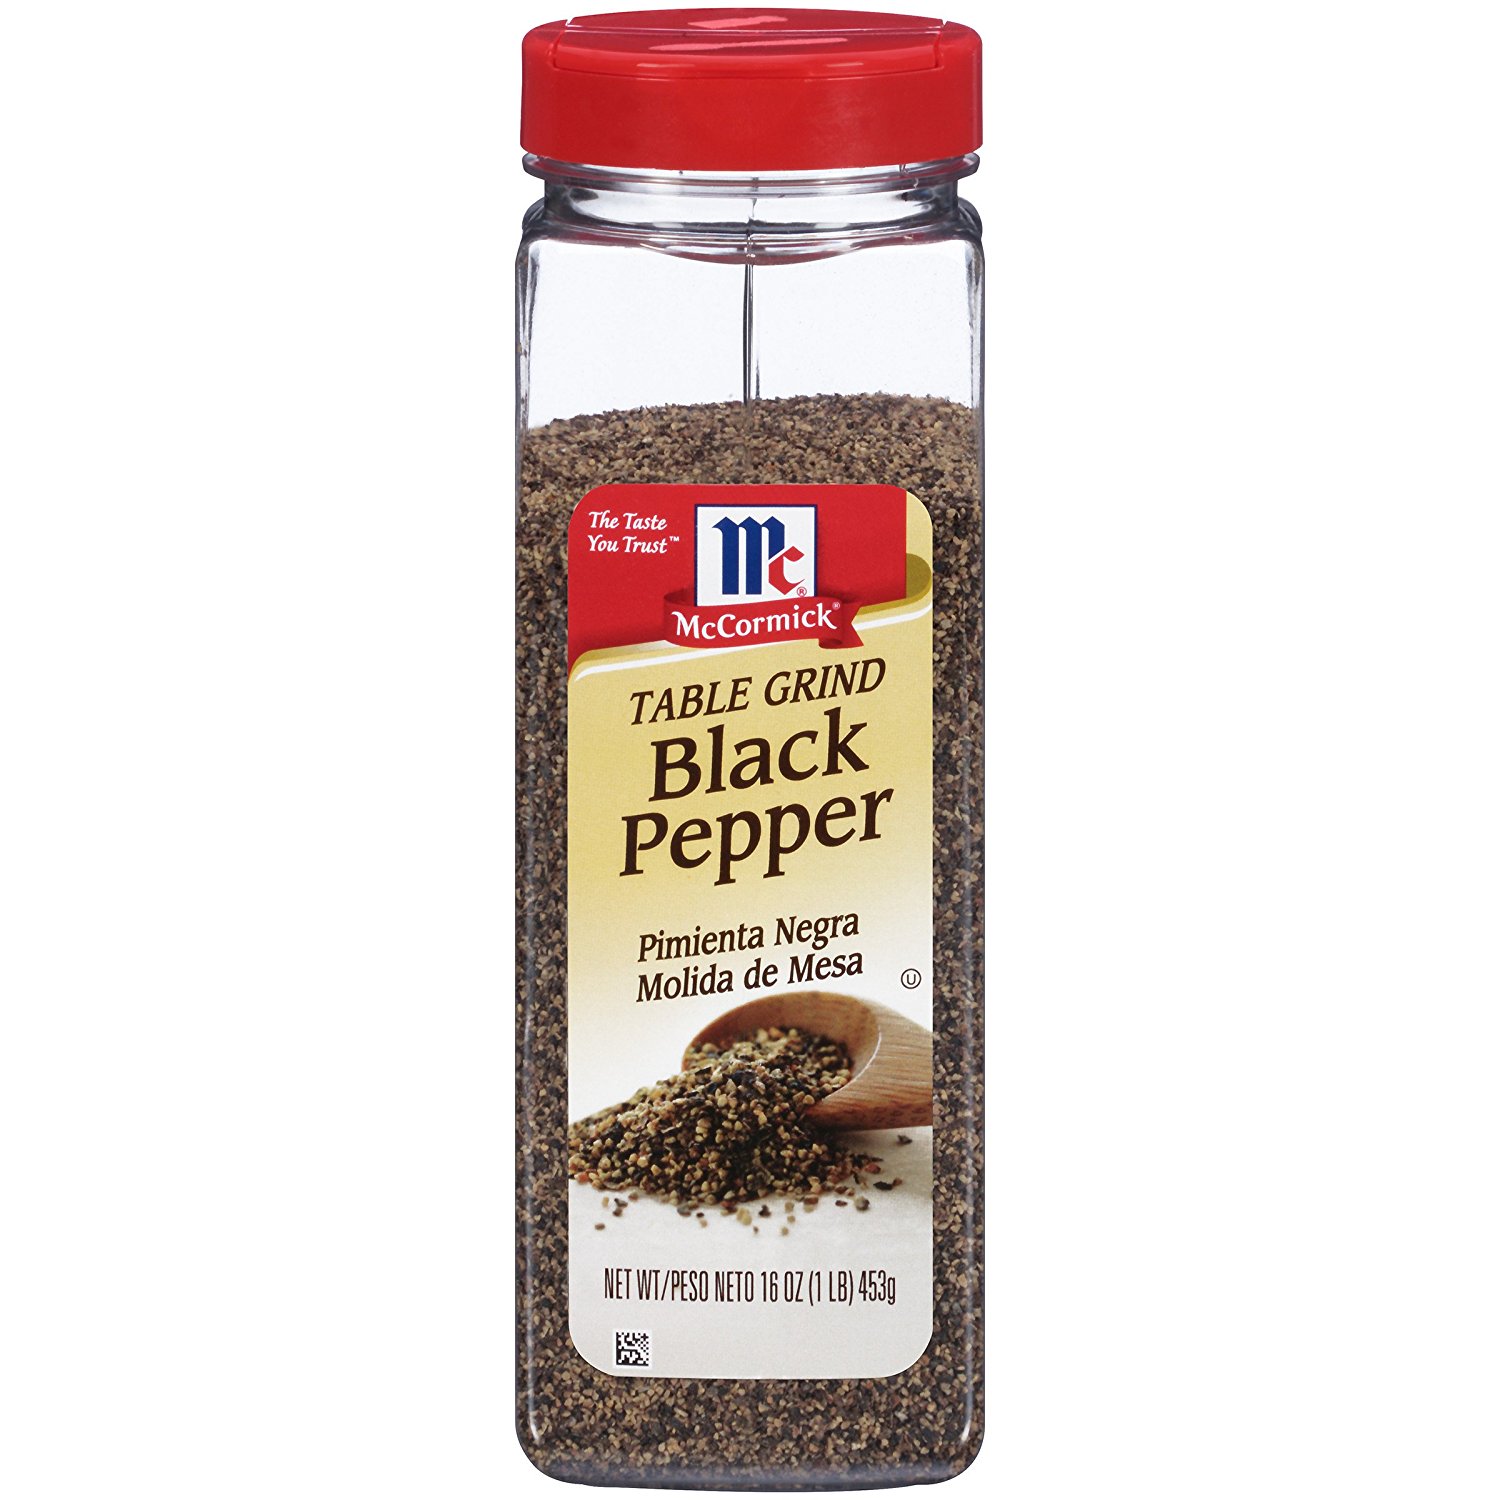 Amazon.com : McCormick Table Ground Black Pepper, 16 oz : Grocery ...